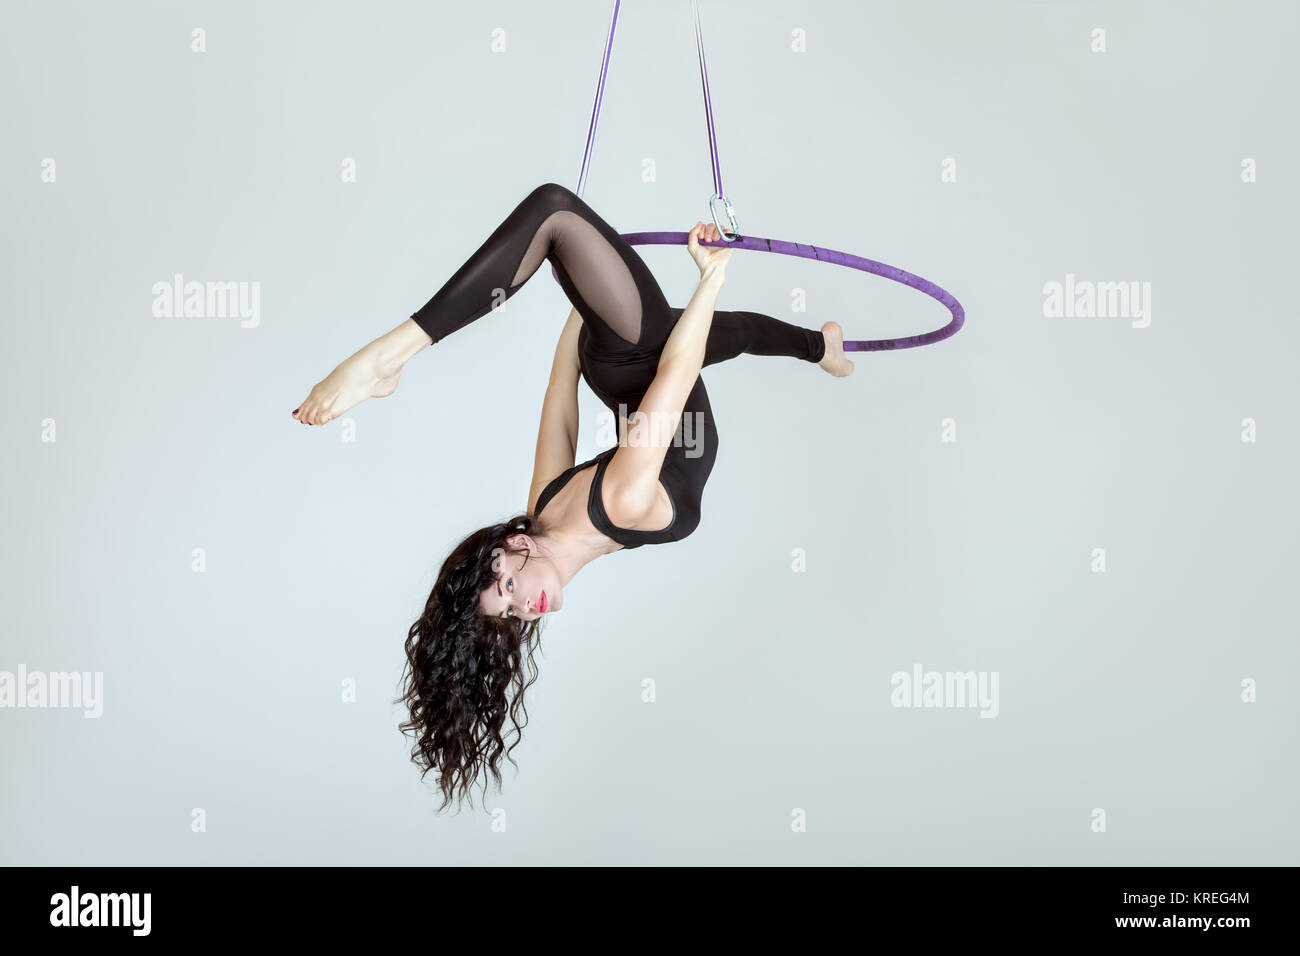 Woman acrobat on a hula hoop does tricks. Stock Photo